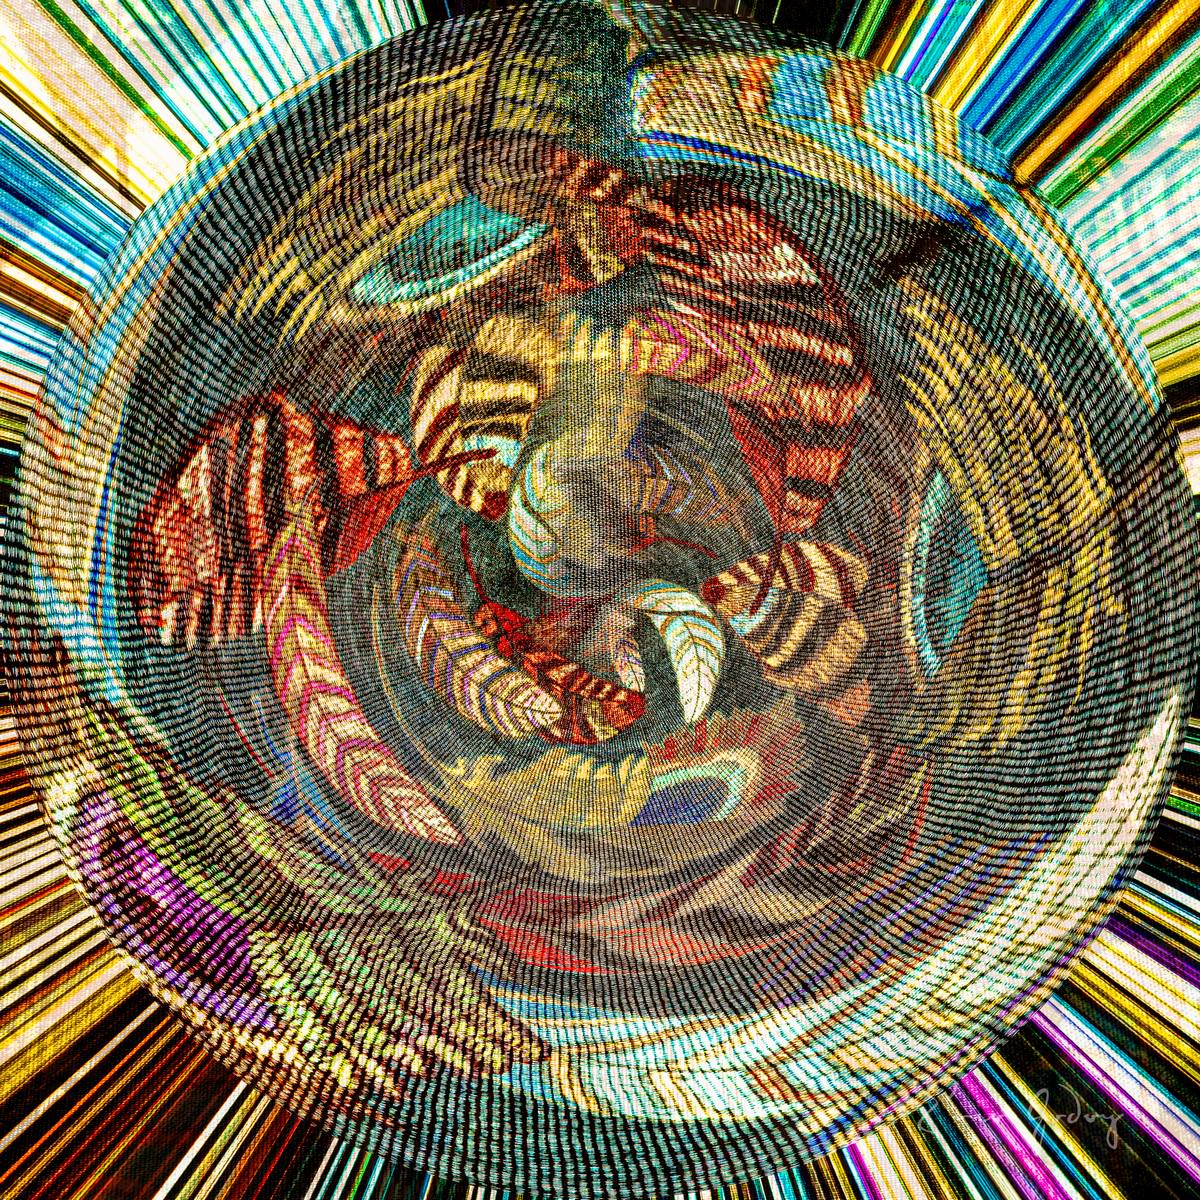 Enio Godoy. Title: Mandala II. Technique: Photography using Lightroom and Photoshop. Dimensions 50 x 50 cm.